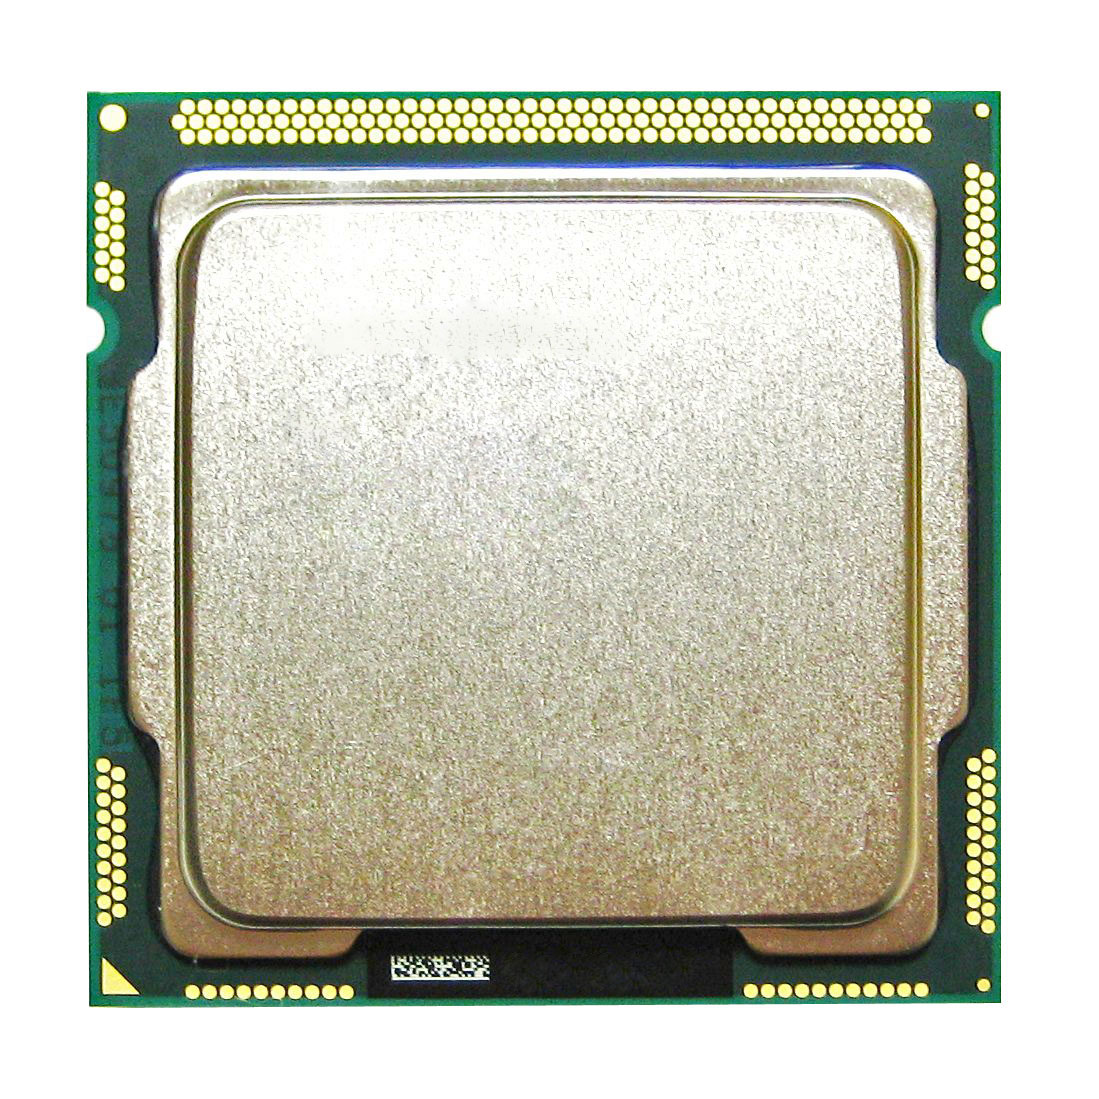 BXC80623I52500 Intel Core i5-2500 Quad Core 3.30GHz 5.00GT/s DMI 6MB L3 Cache Socket LGA1155 Desktop Processor